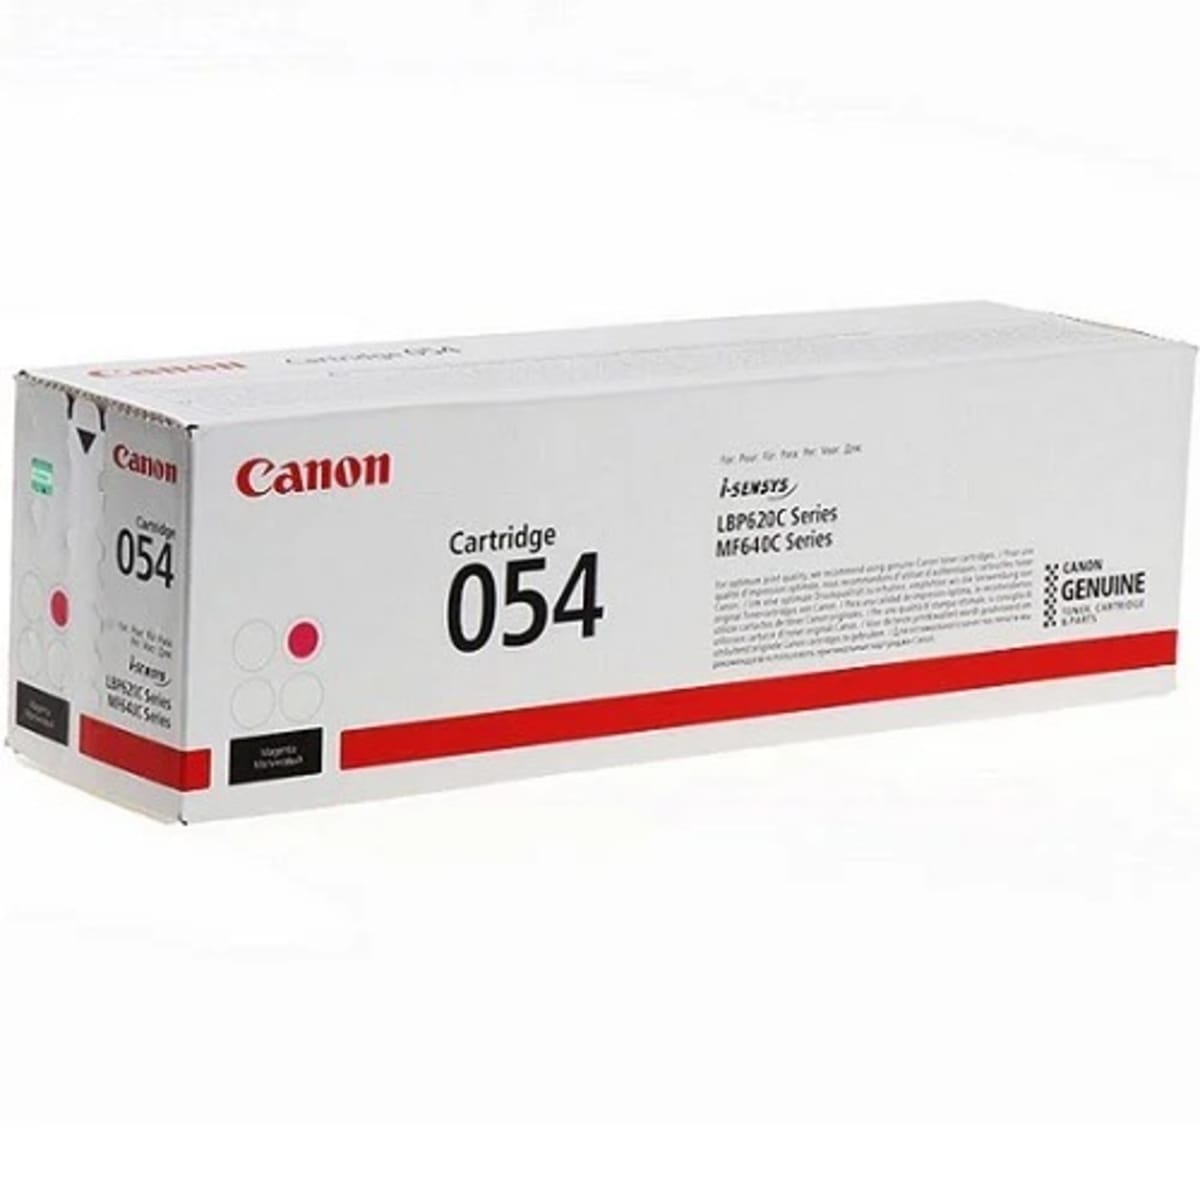 Canon Cartridge Toner For Canon - 054 - Magenta